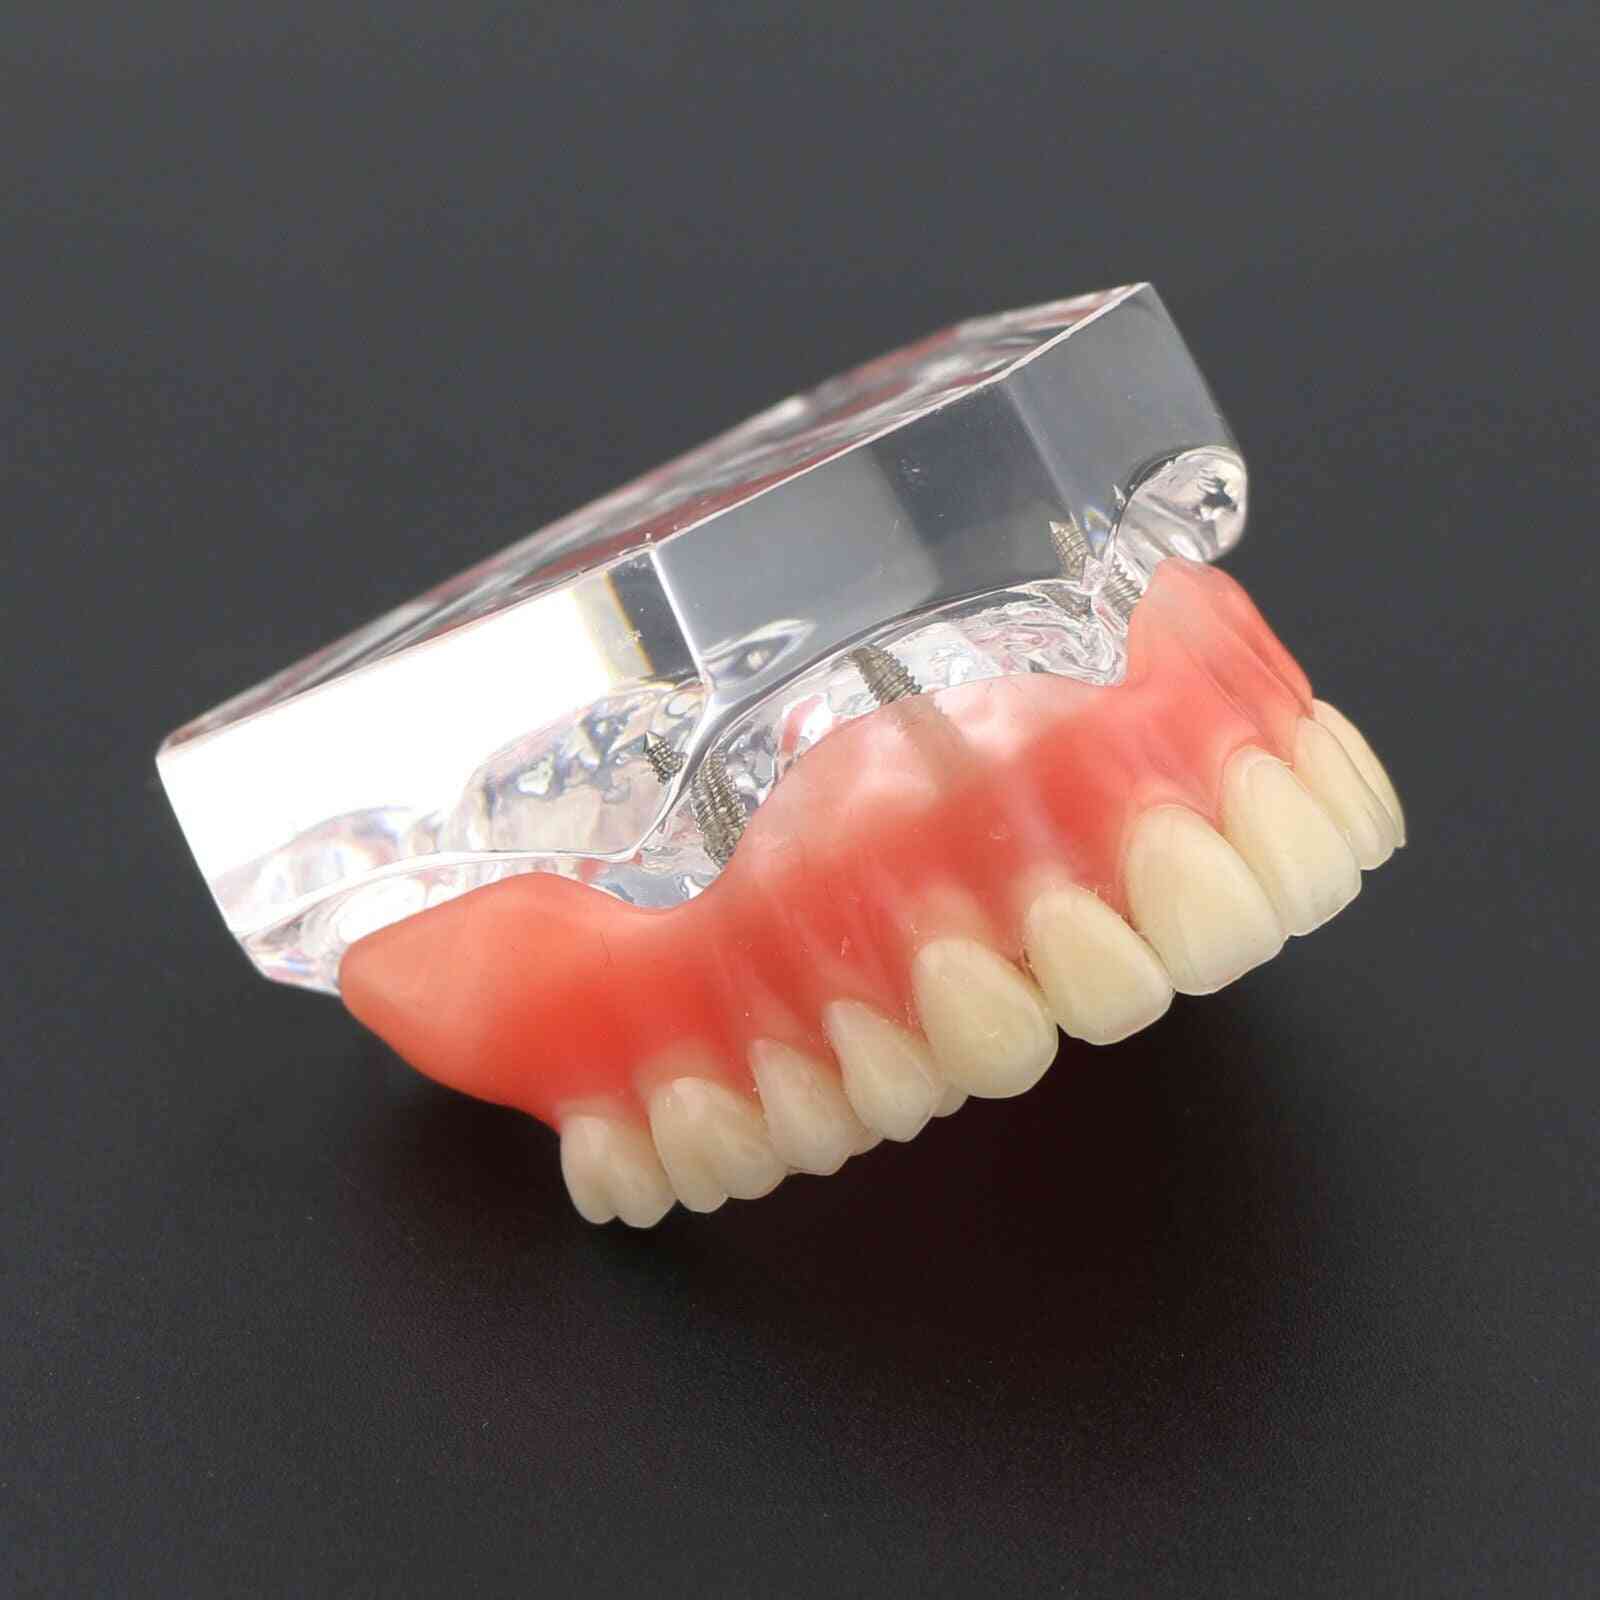 1pcs Dental Upper Overdenture Superior 4 Implants Demo Model, Teeth Model